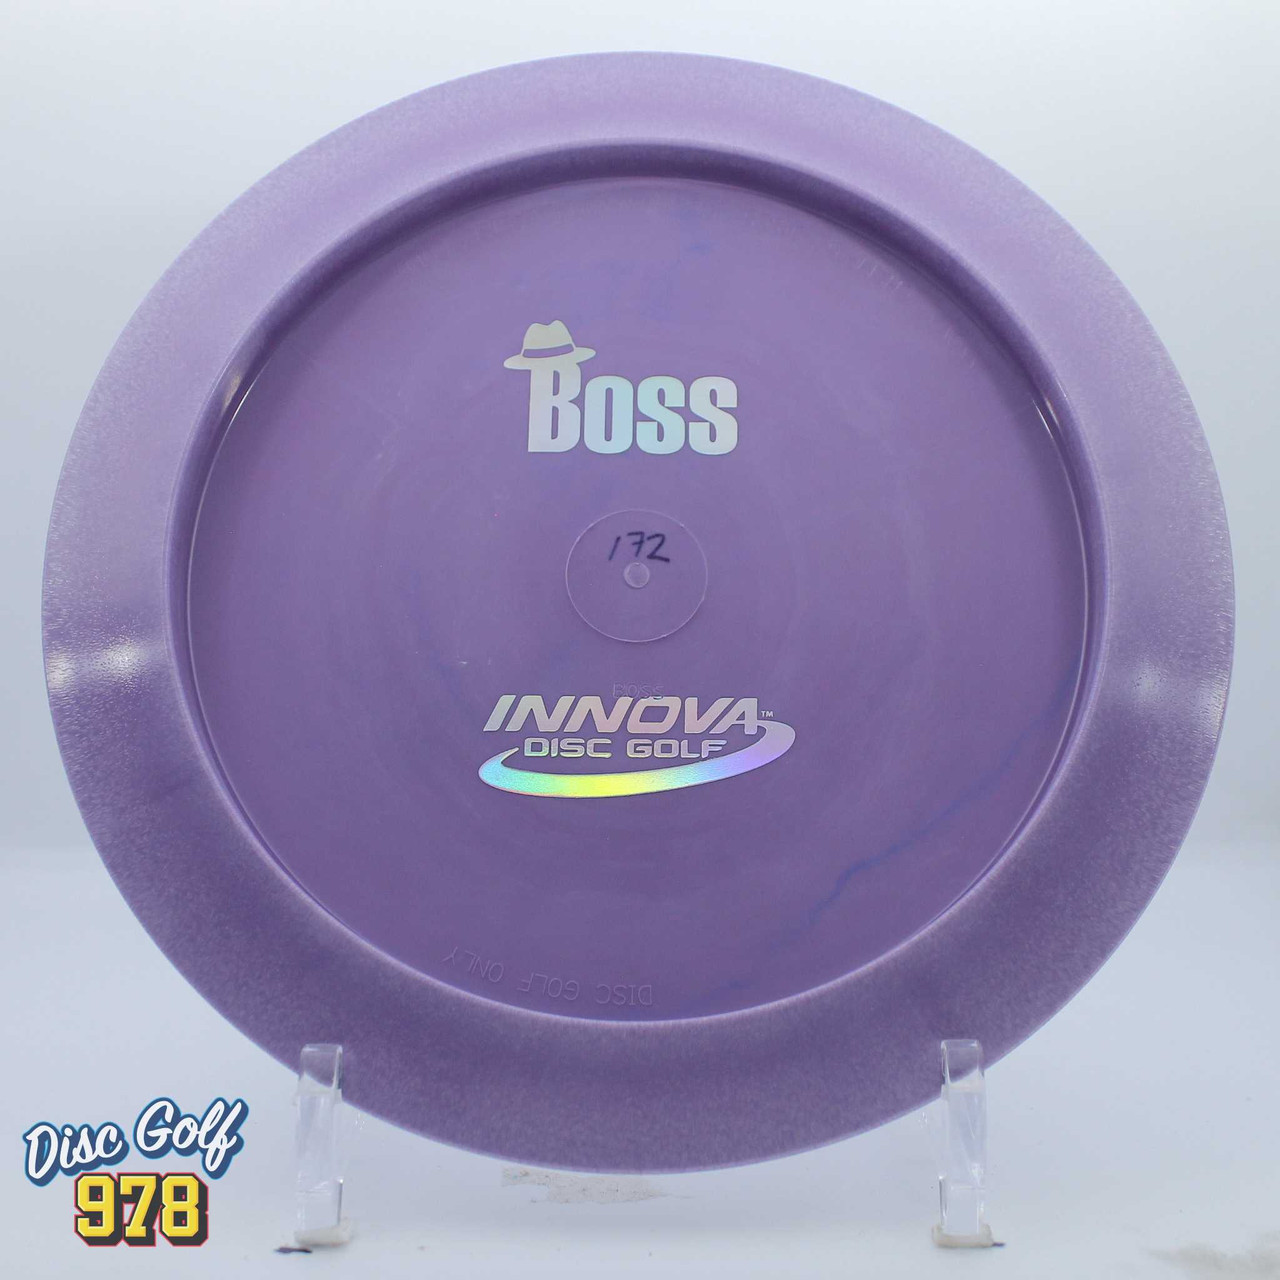 Innova Boss Star Bottom Stamp Purple-Prism 172.7g